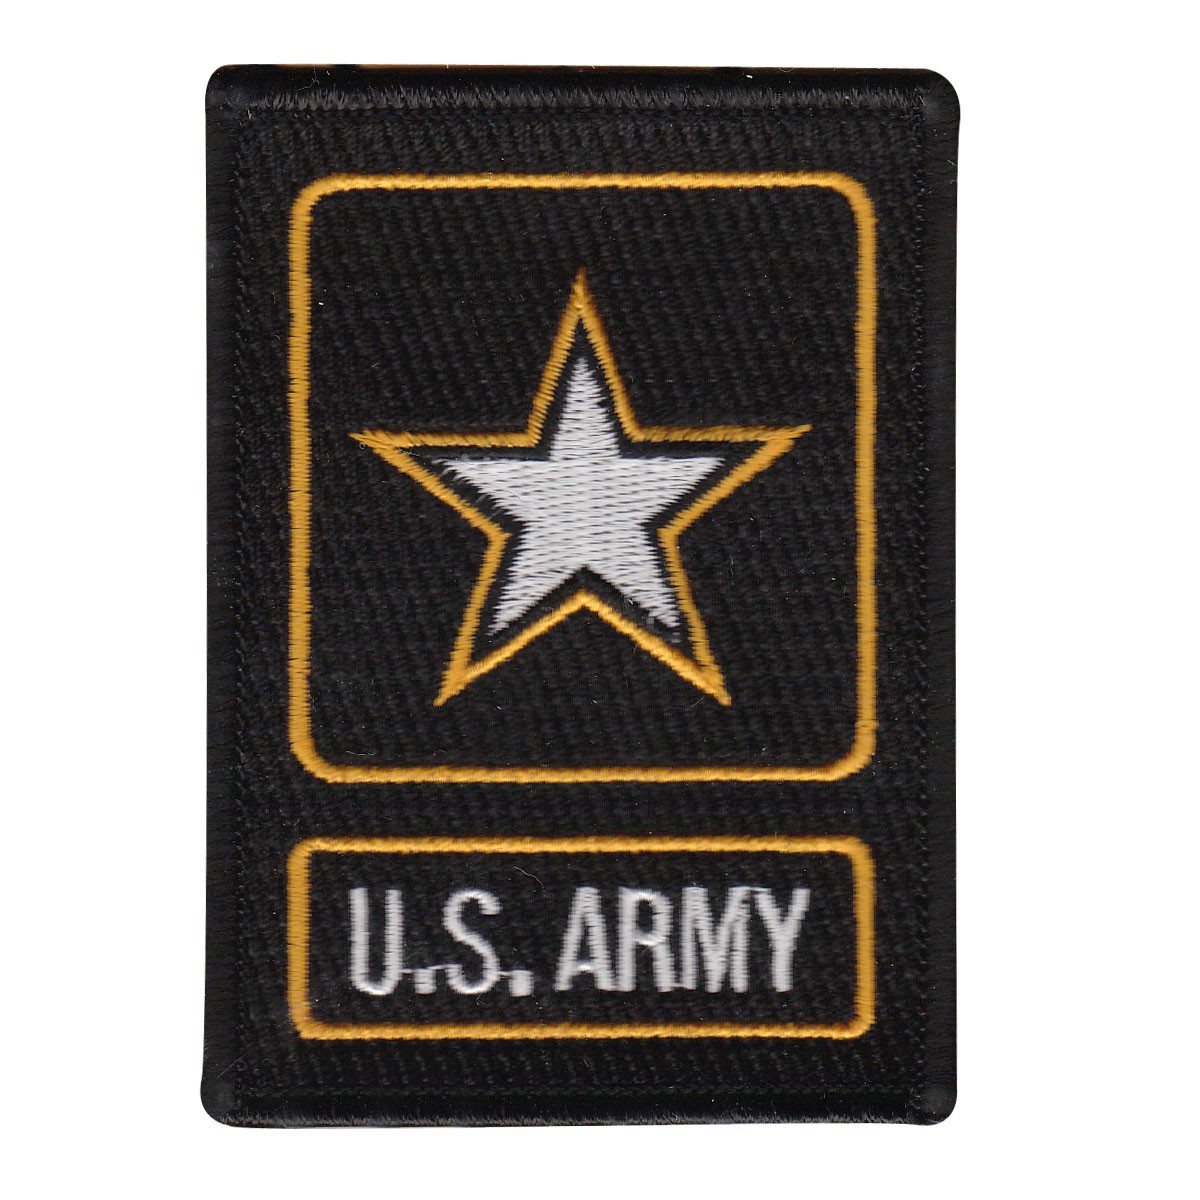 Army Logo Clip Art